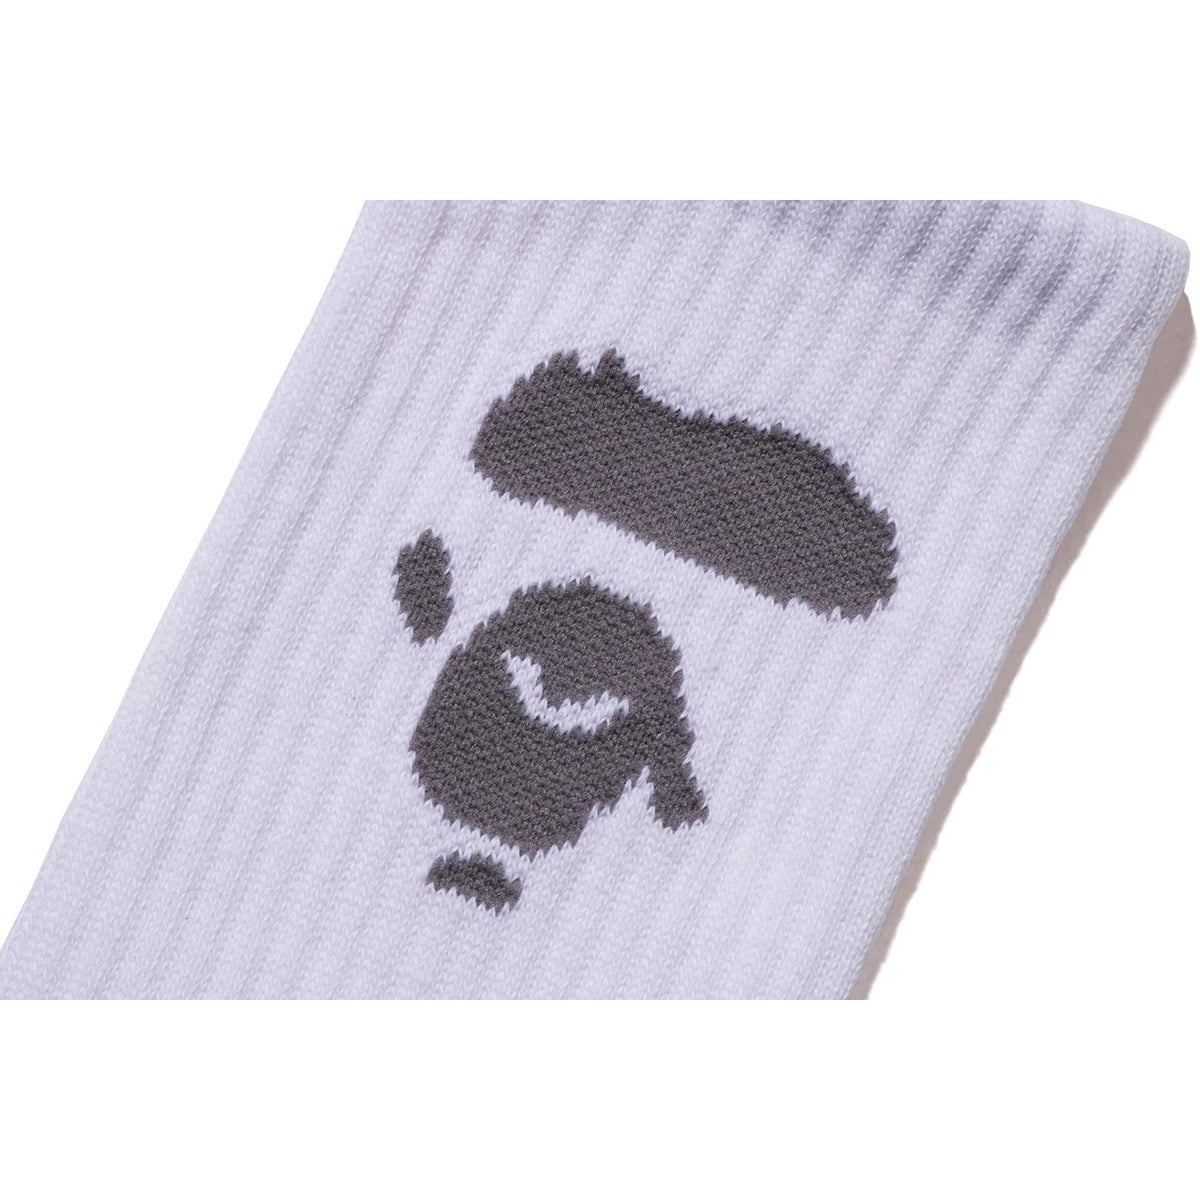 Bape Ape Head Socks - A Bathing Ape